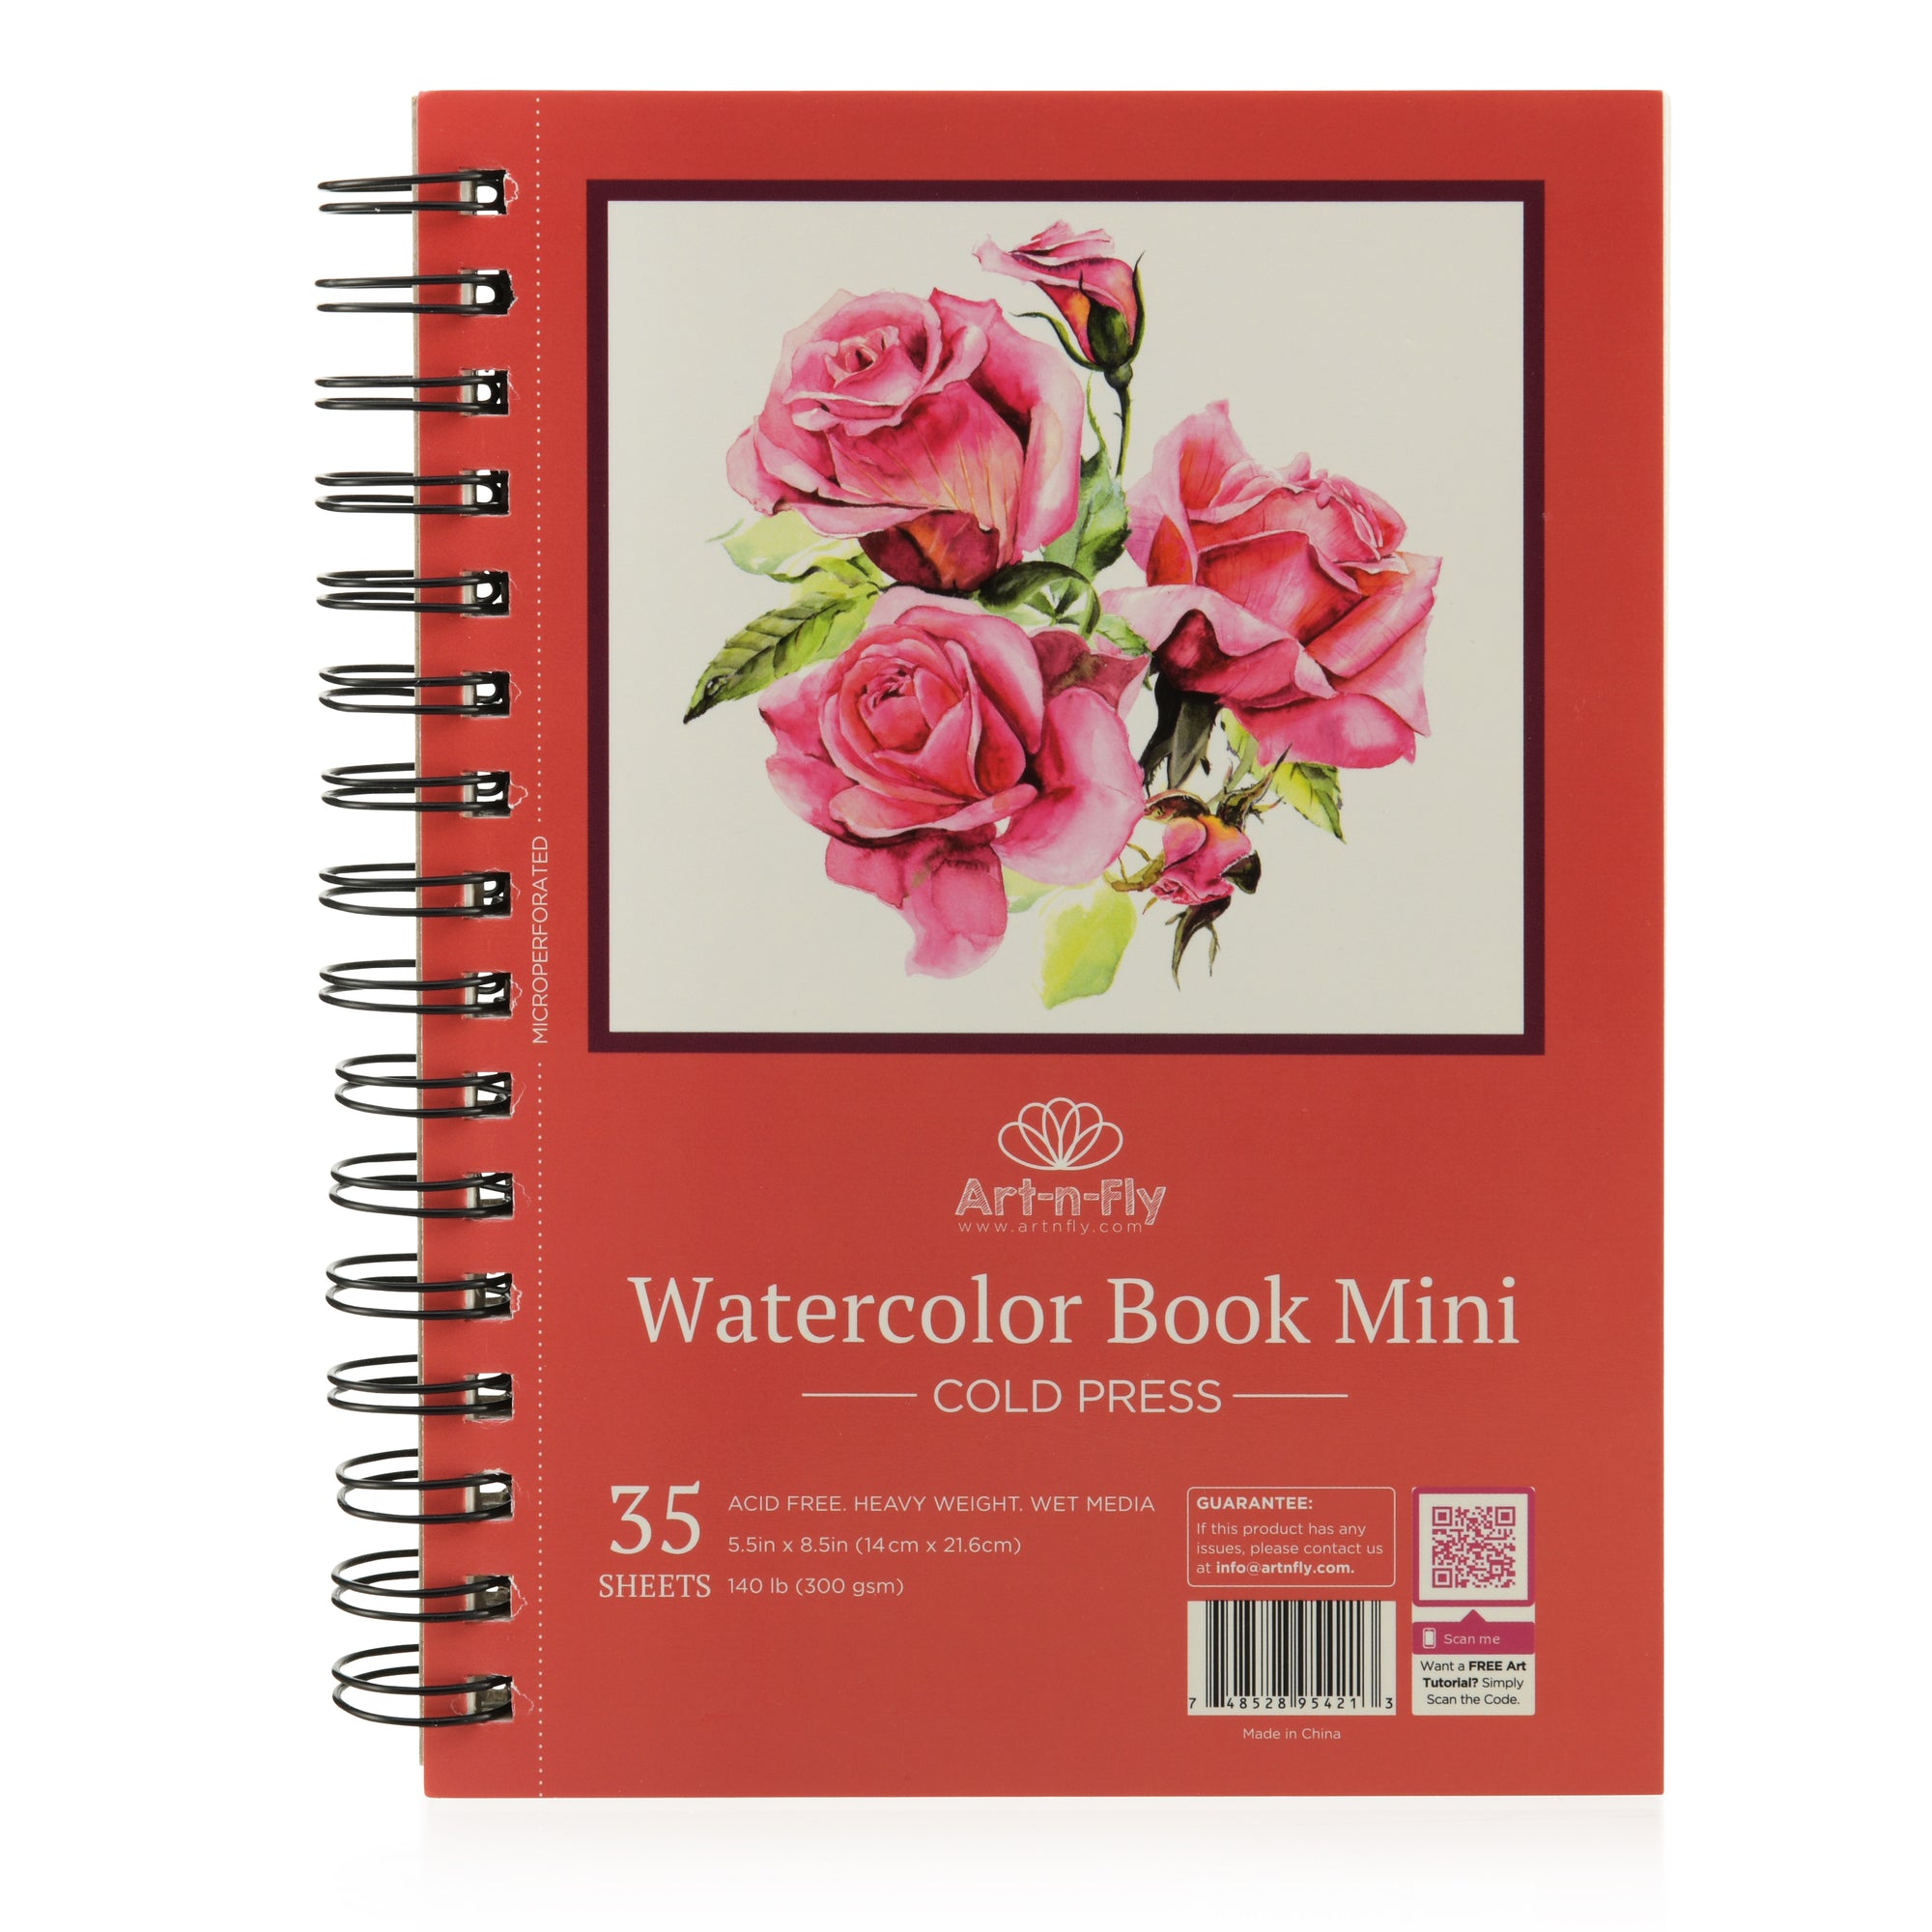 3 Watercolor Sketchbook Recommendations